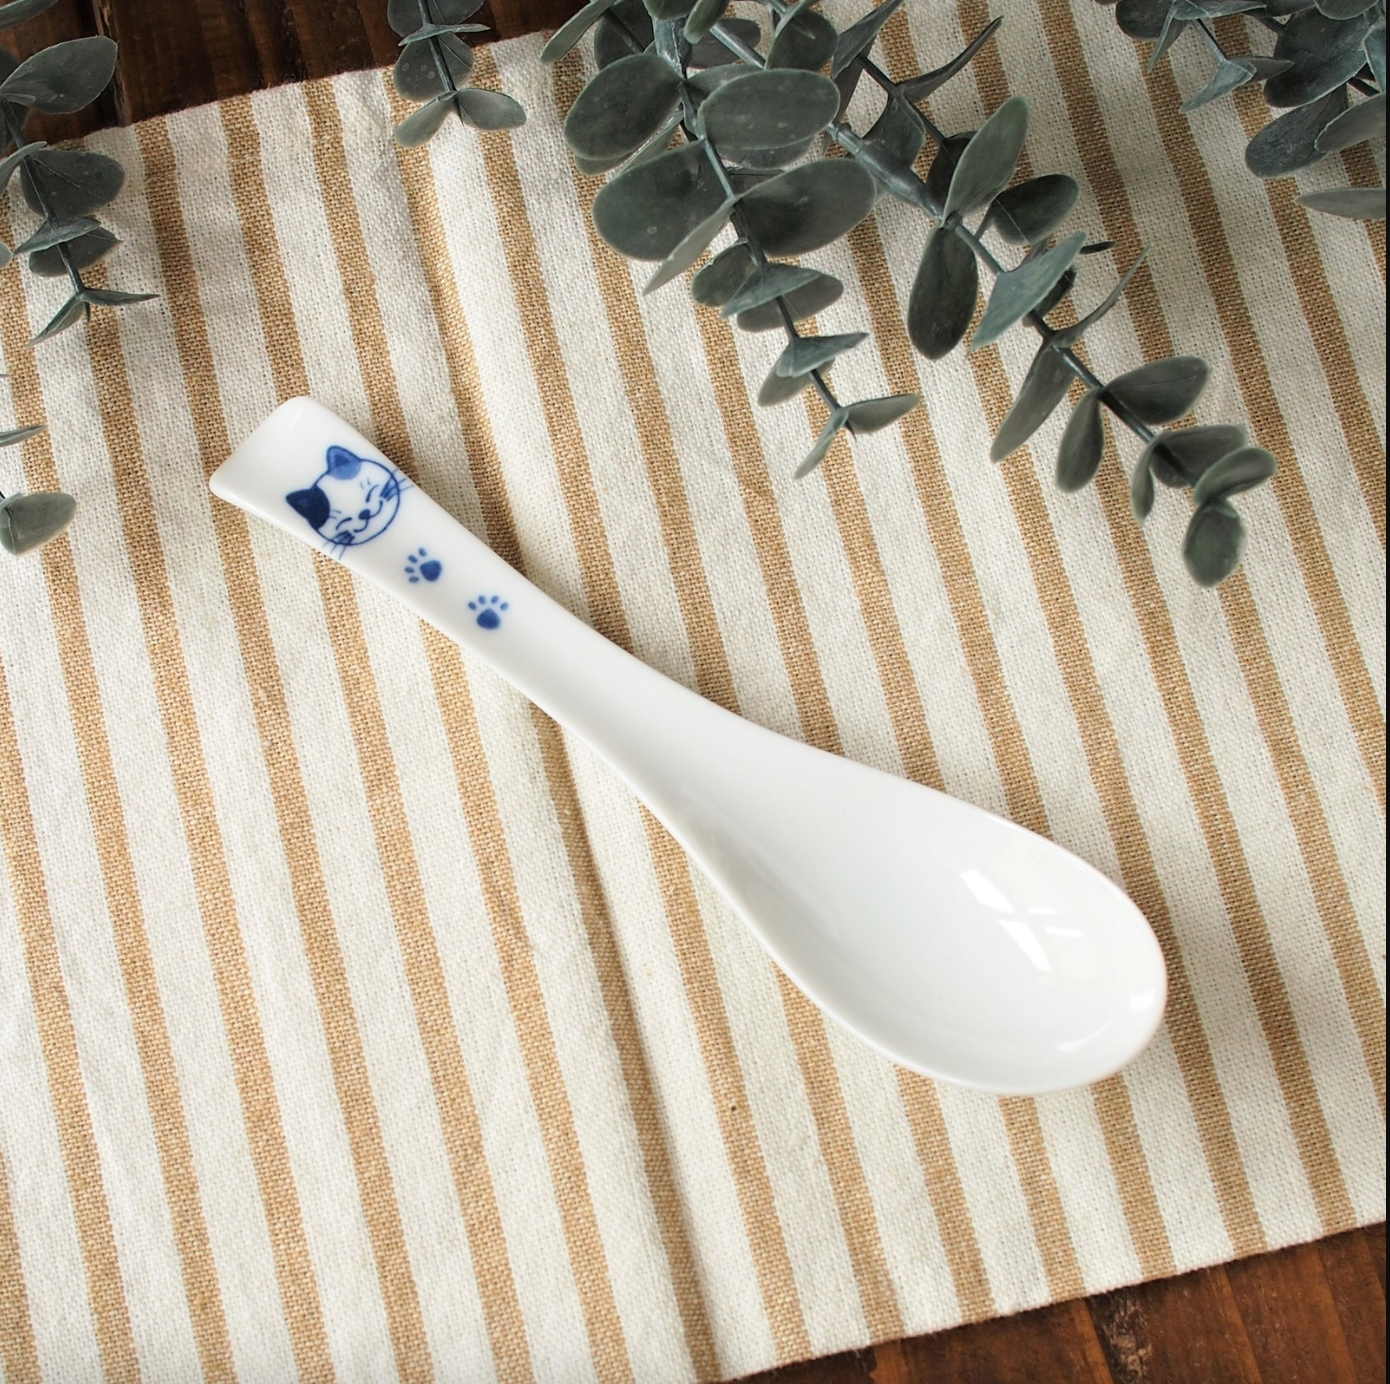 Nekogura Lightweight Spoon Made in Japan/ Mino Ware